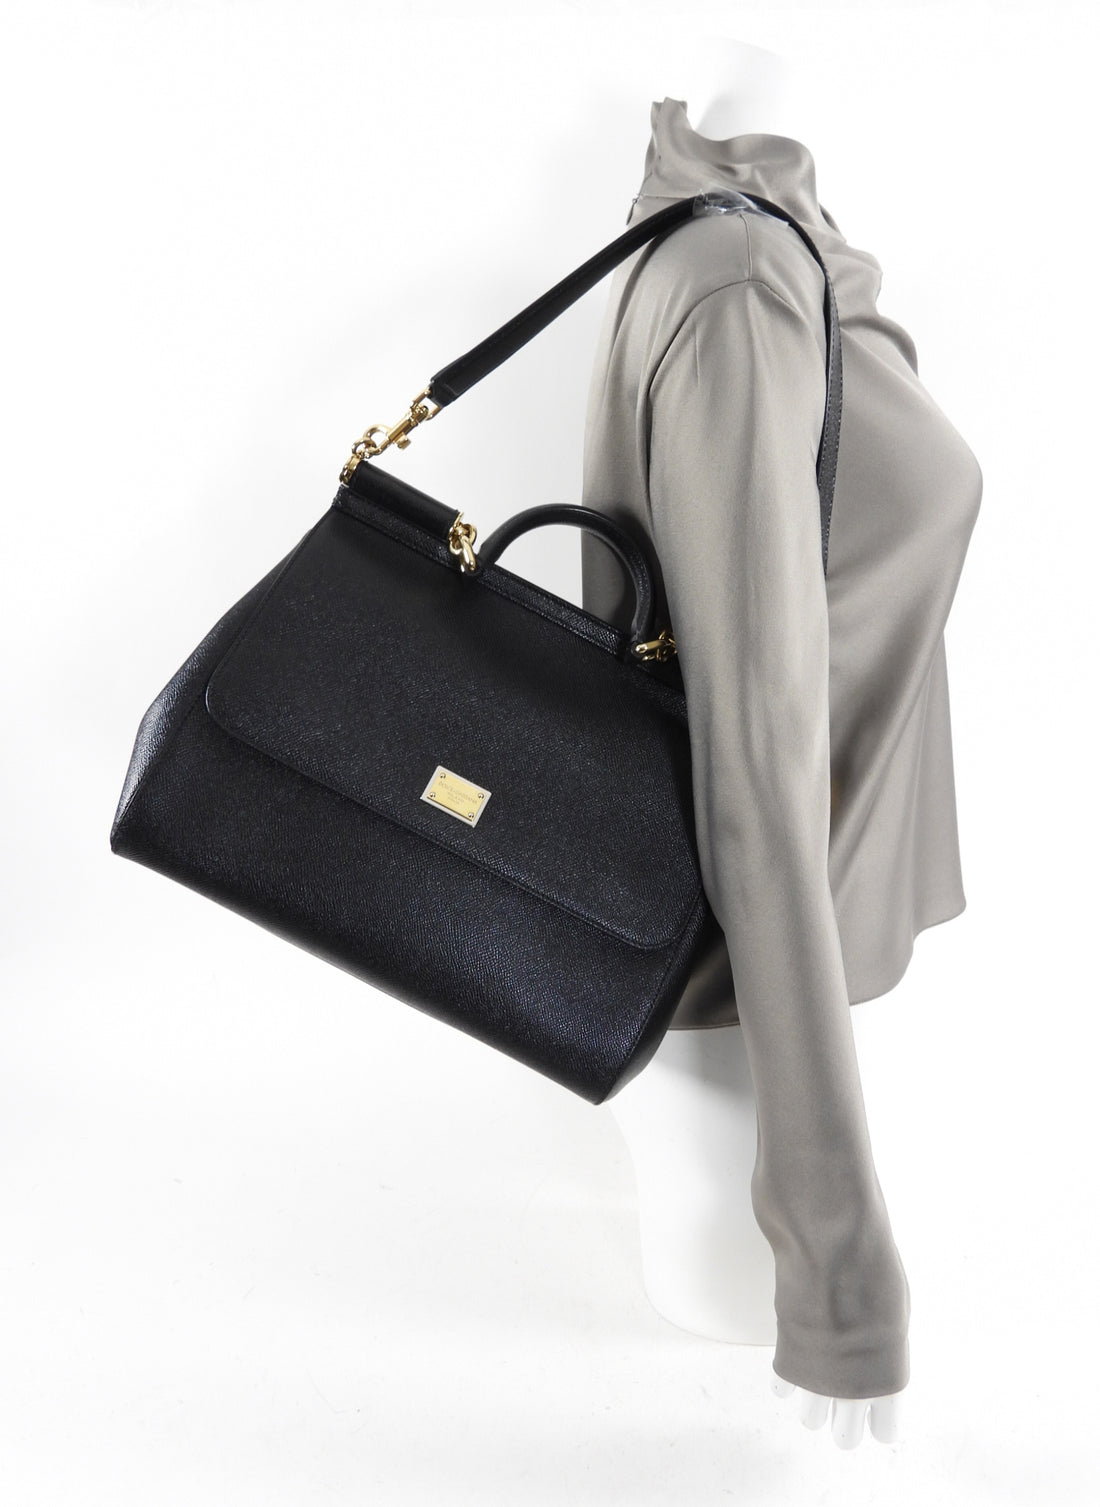 Dolce & Gabbana Sicily Large Leather Bag